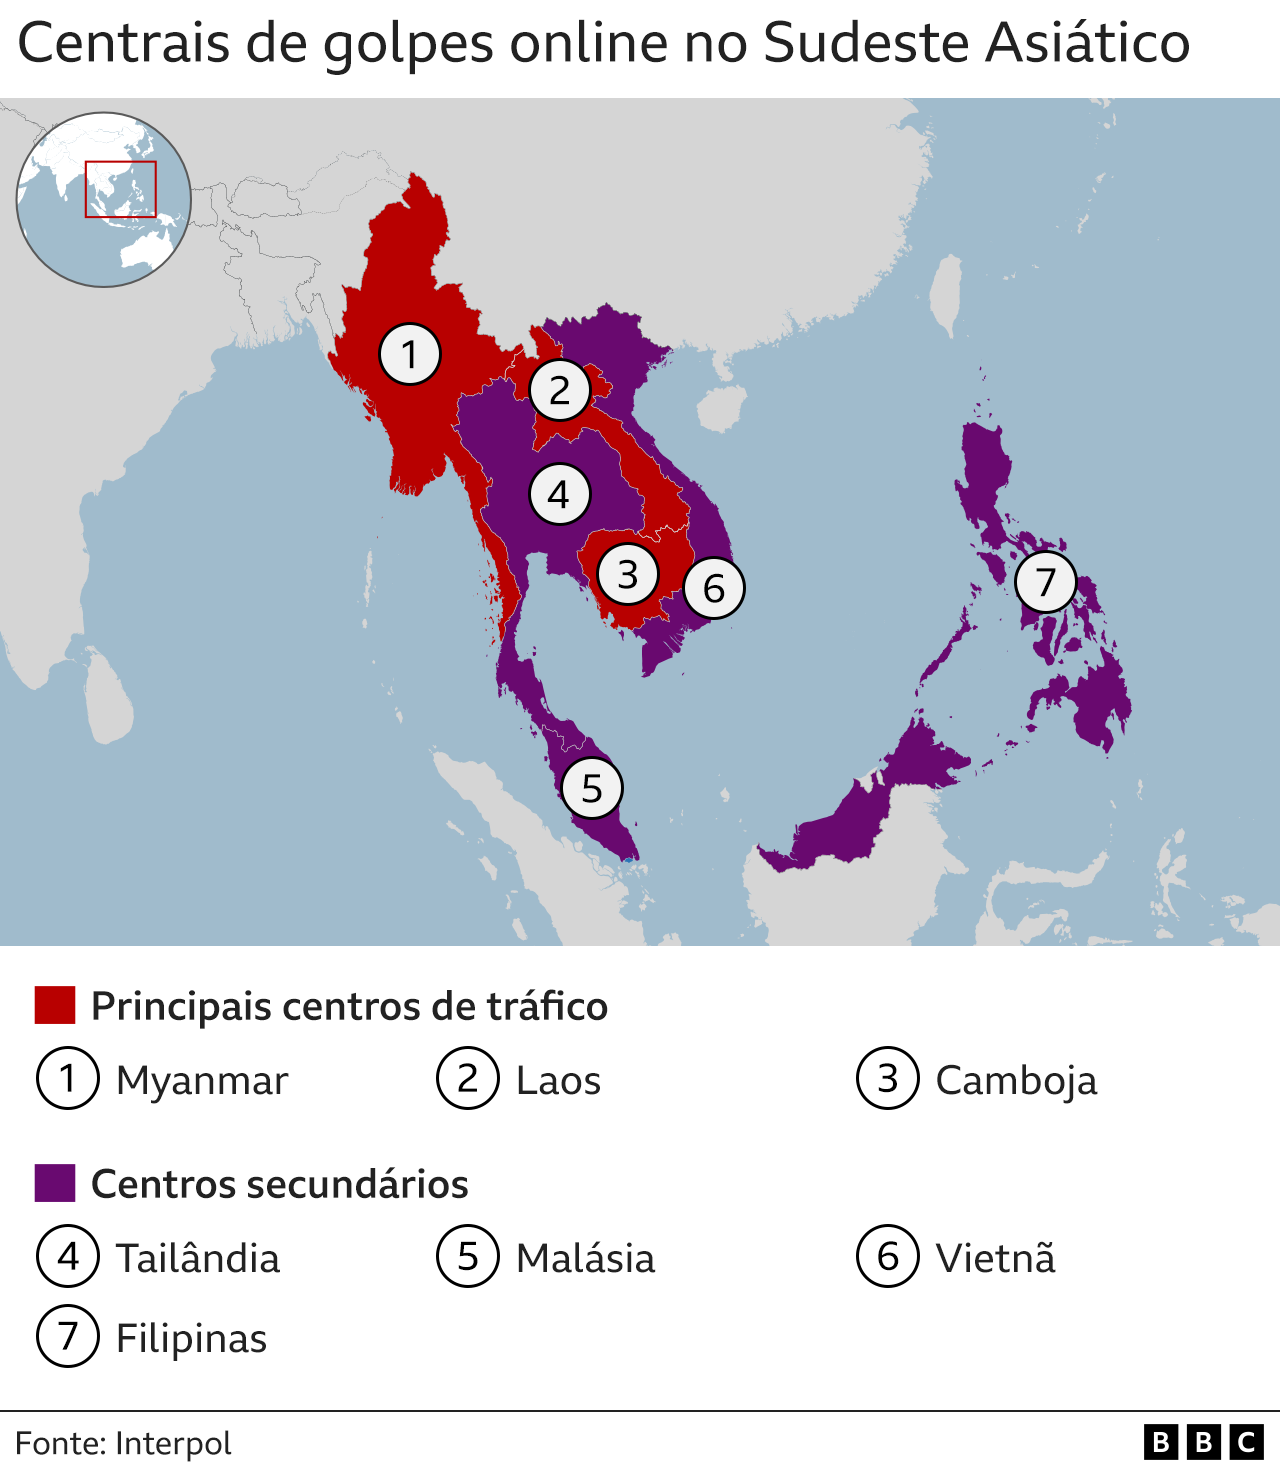 Os países envolvidos nas centrais de golpes online no Sudeste Asiático incluem Mianmar, Laos, Camboja, Filipinas, Malásia, Tailândia e Vietnã.